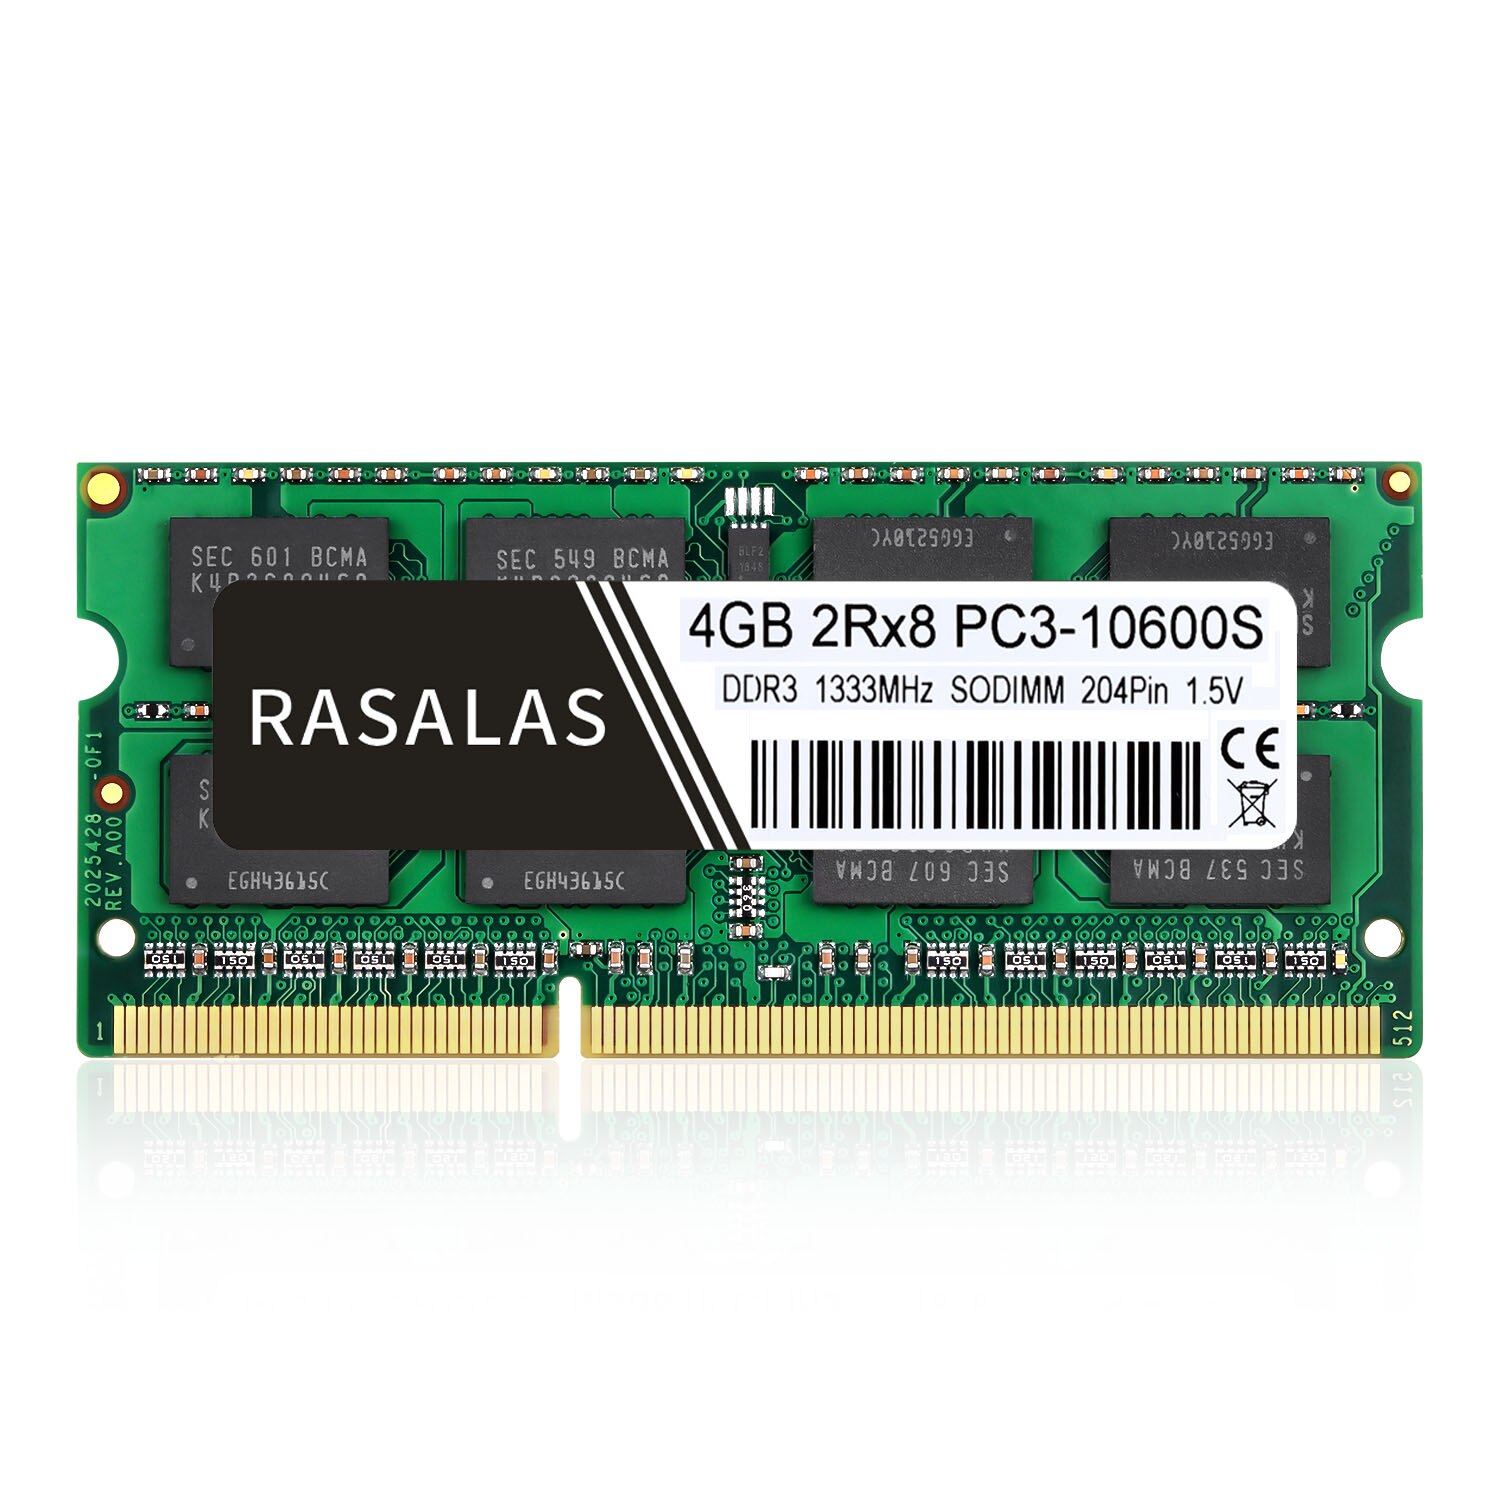 Rasalas DDR3 DDR4 RAM 2G 4GB 8GB 16GB PC3-10600S 12800S 21300S 1333Mhz SO-DIMM 1.5V Notebook 204Pin Laptop Memory Sodimm NO-ECC